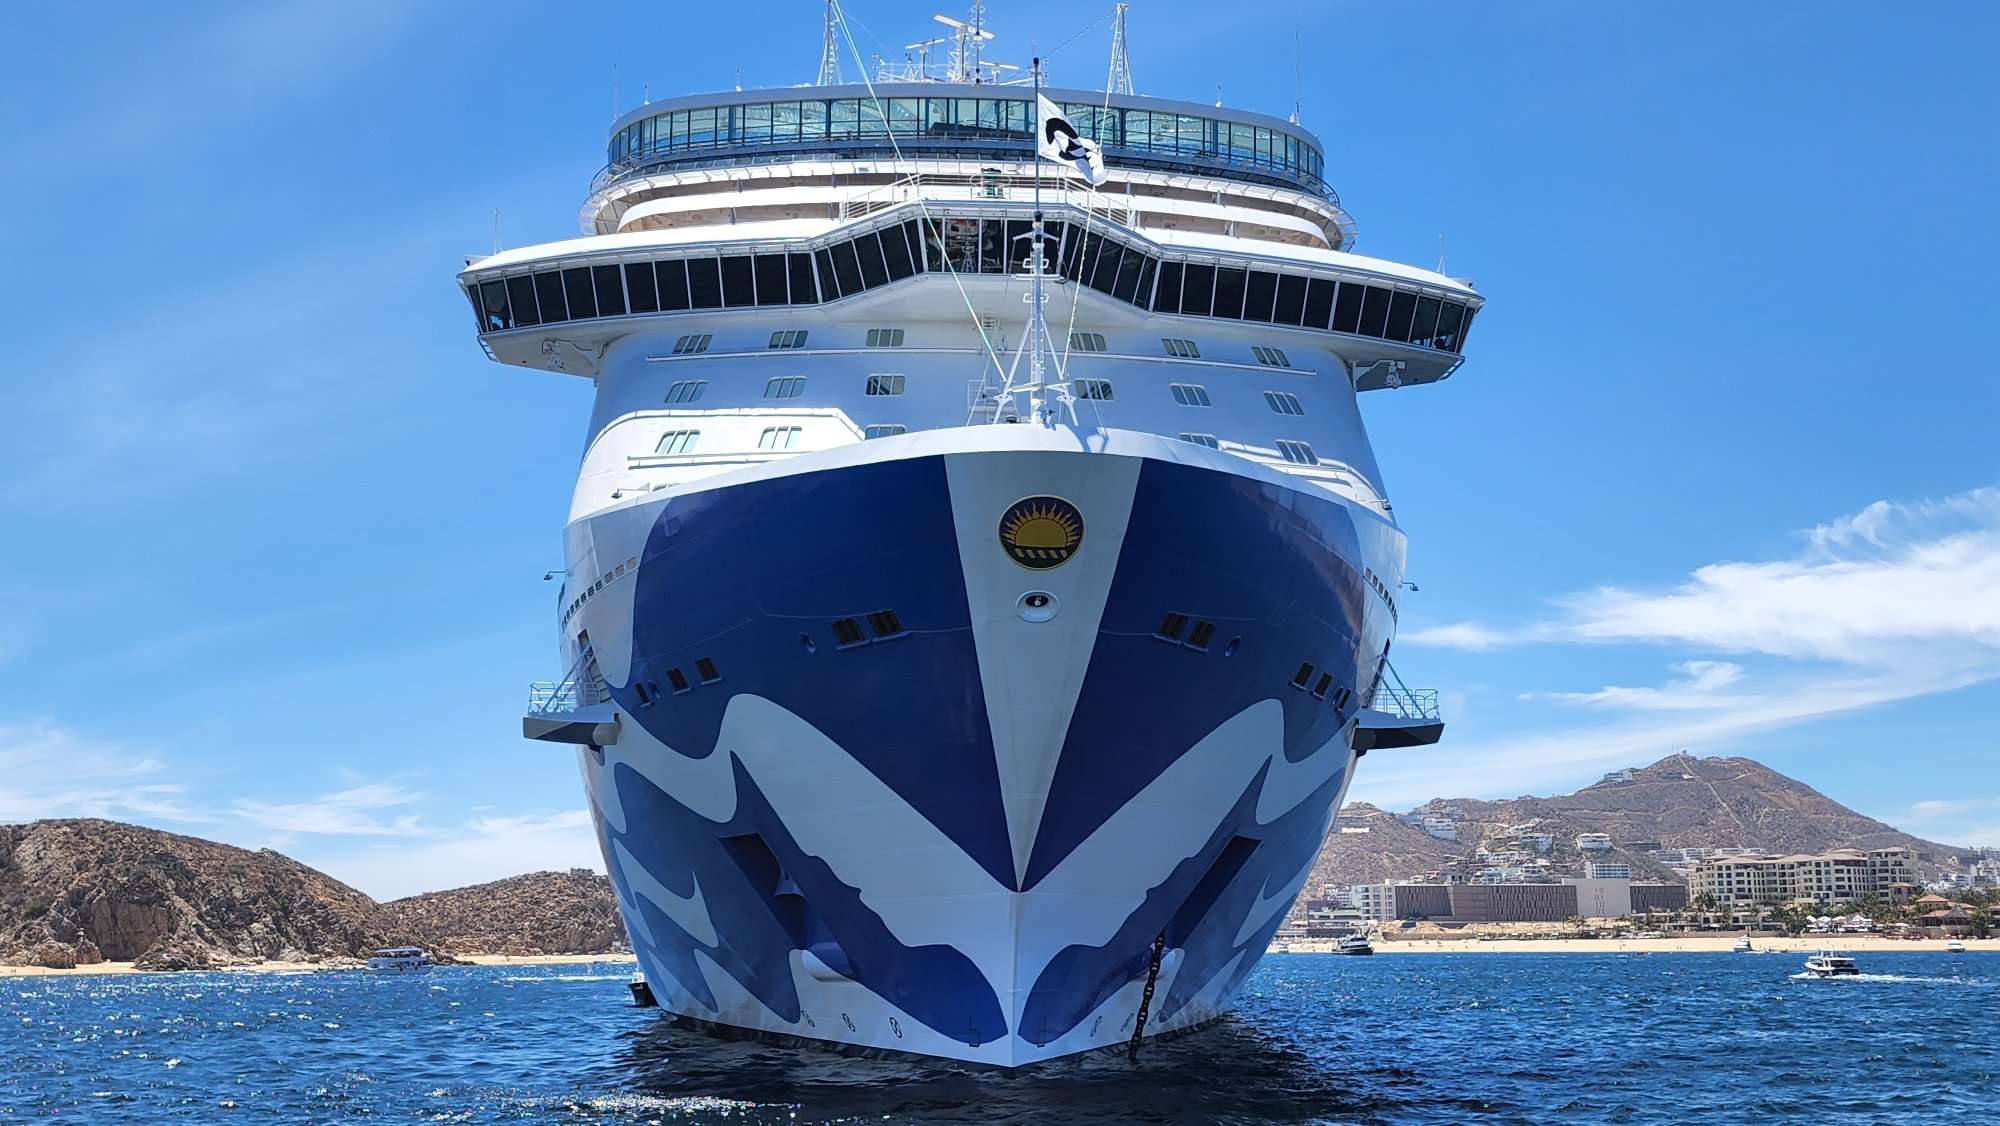 Princess cruise ship in Cabo cruise port